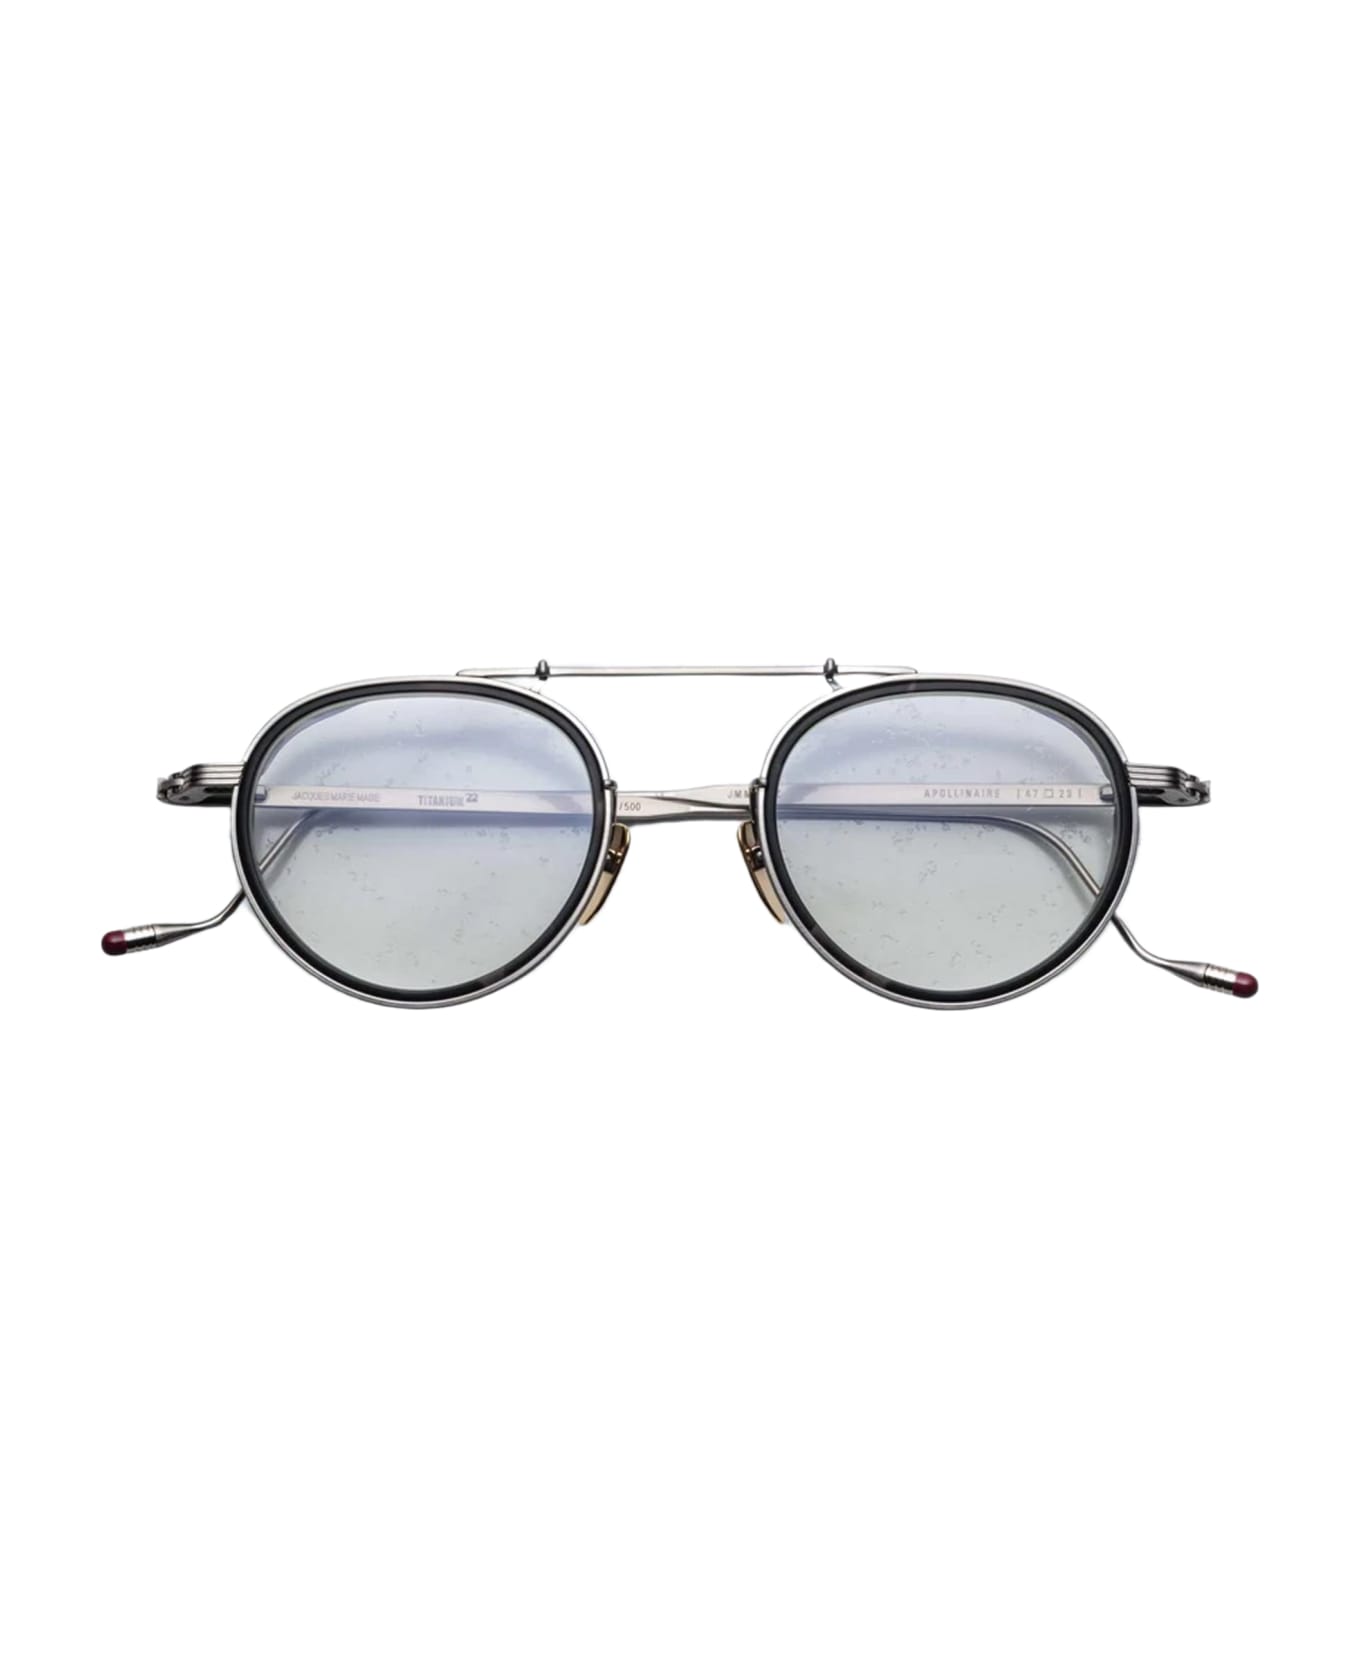 Jacques Marie Mage Apollinaire - Lunar Rx Glasses - silver/black